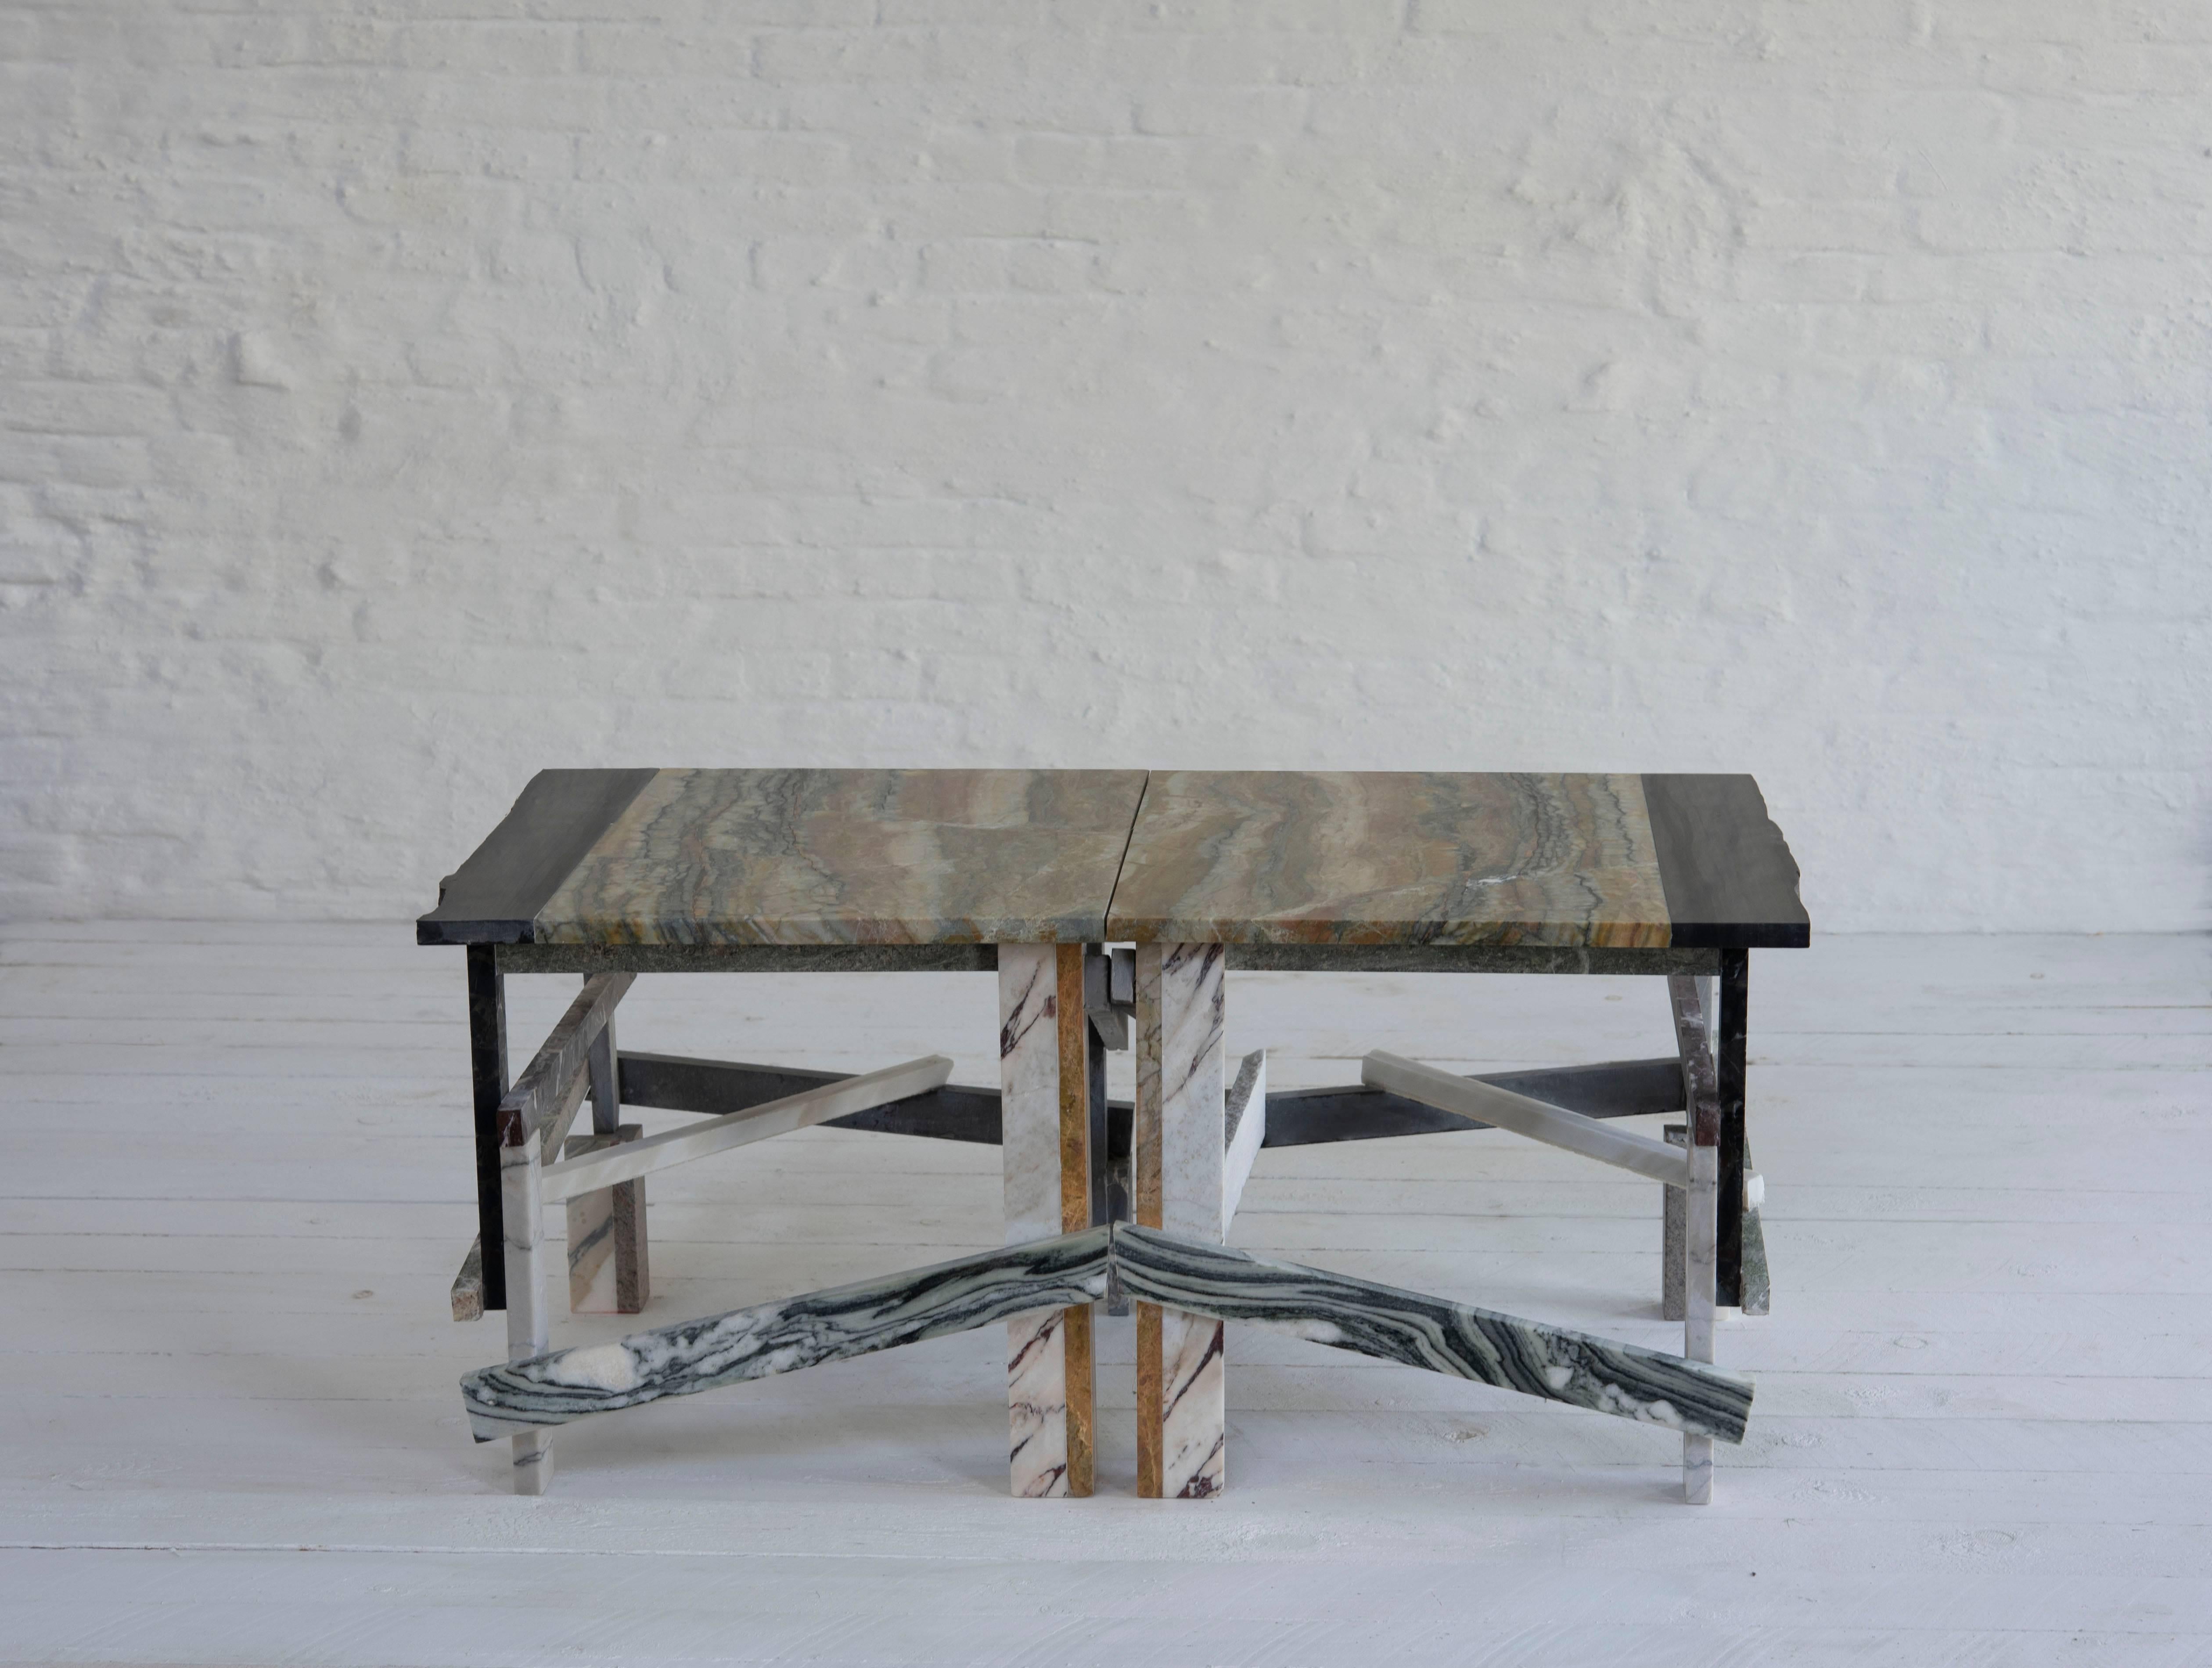 New tables made of marble, granite, limestone, basalt, slate by Belgian duo atelier lachaert dhanis. 

Measures: H 45.5, W 53, D 51 CM (each)
H 18’’, W 20.9’’, D 20.1’’ (each).